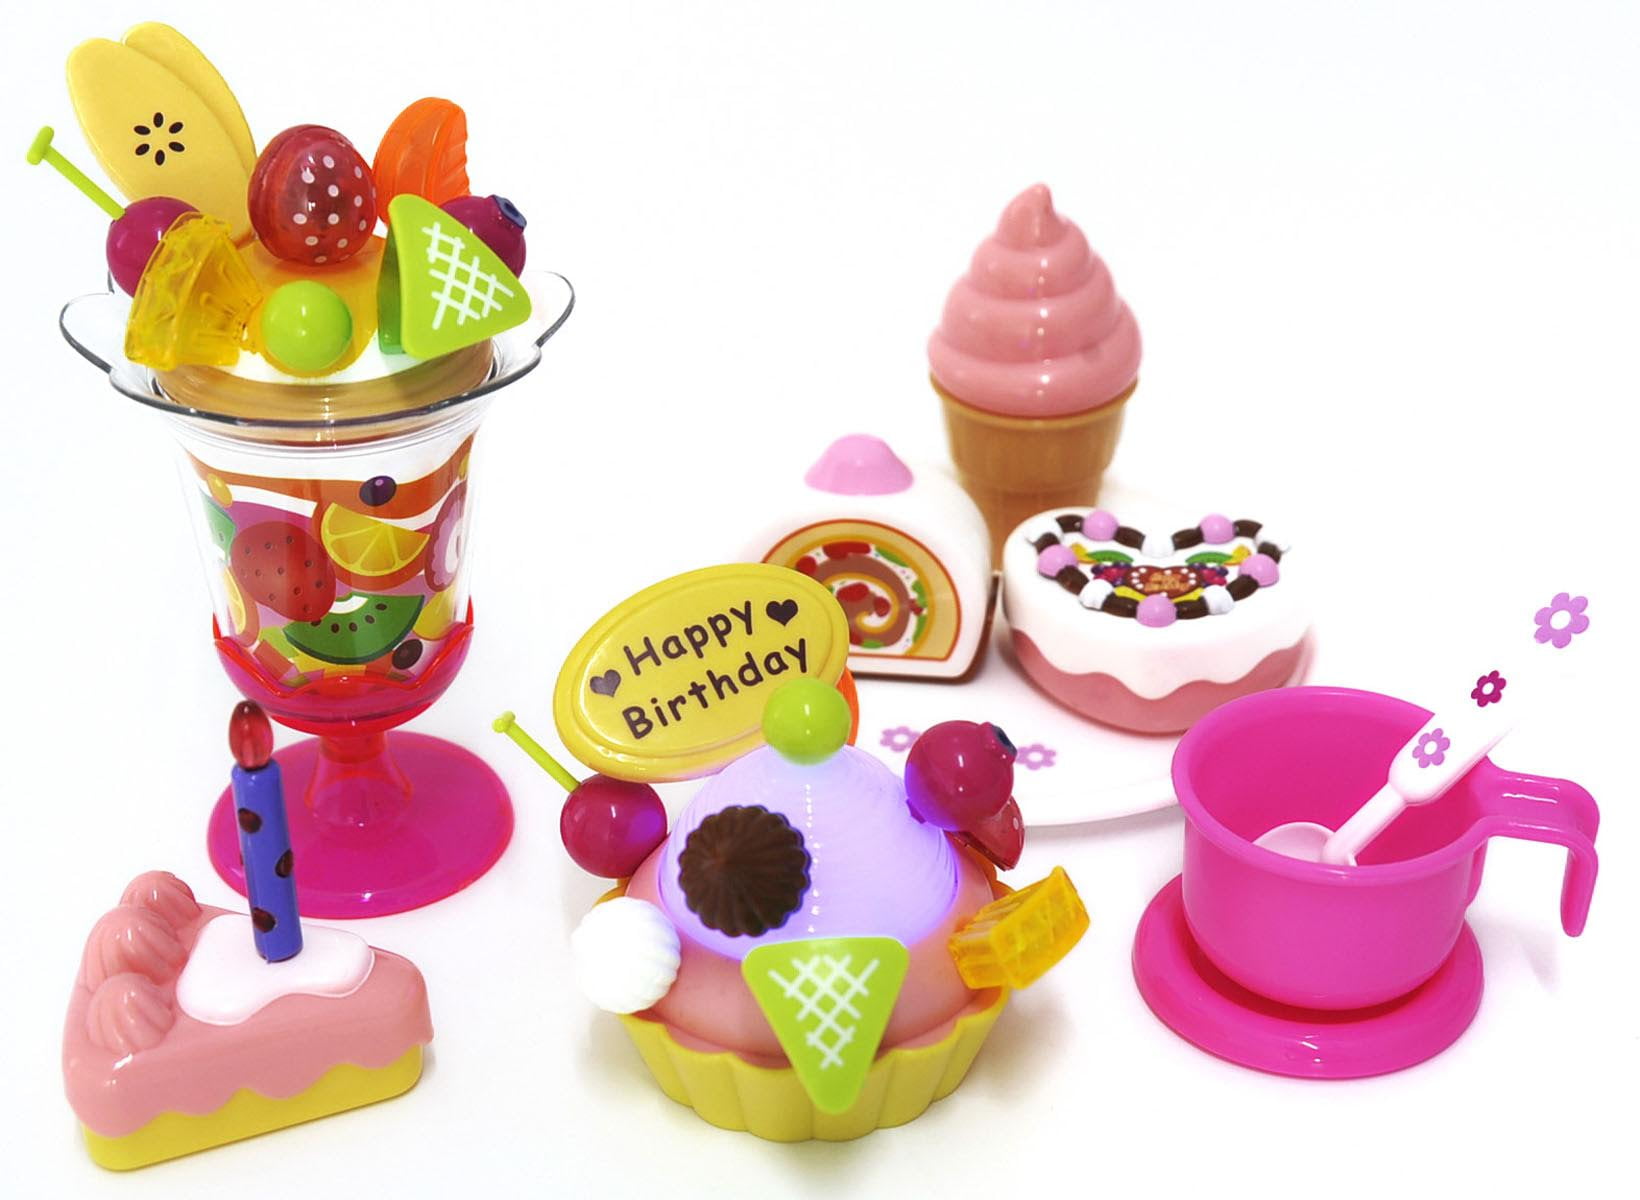 Ps730 Play Food Set With Cupcake, Cakes, Ice Cream & Sundae